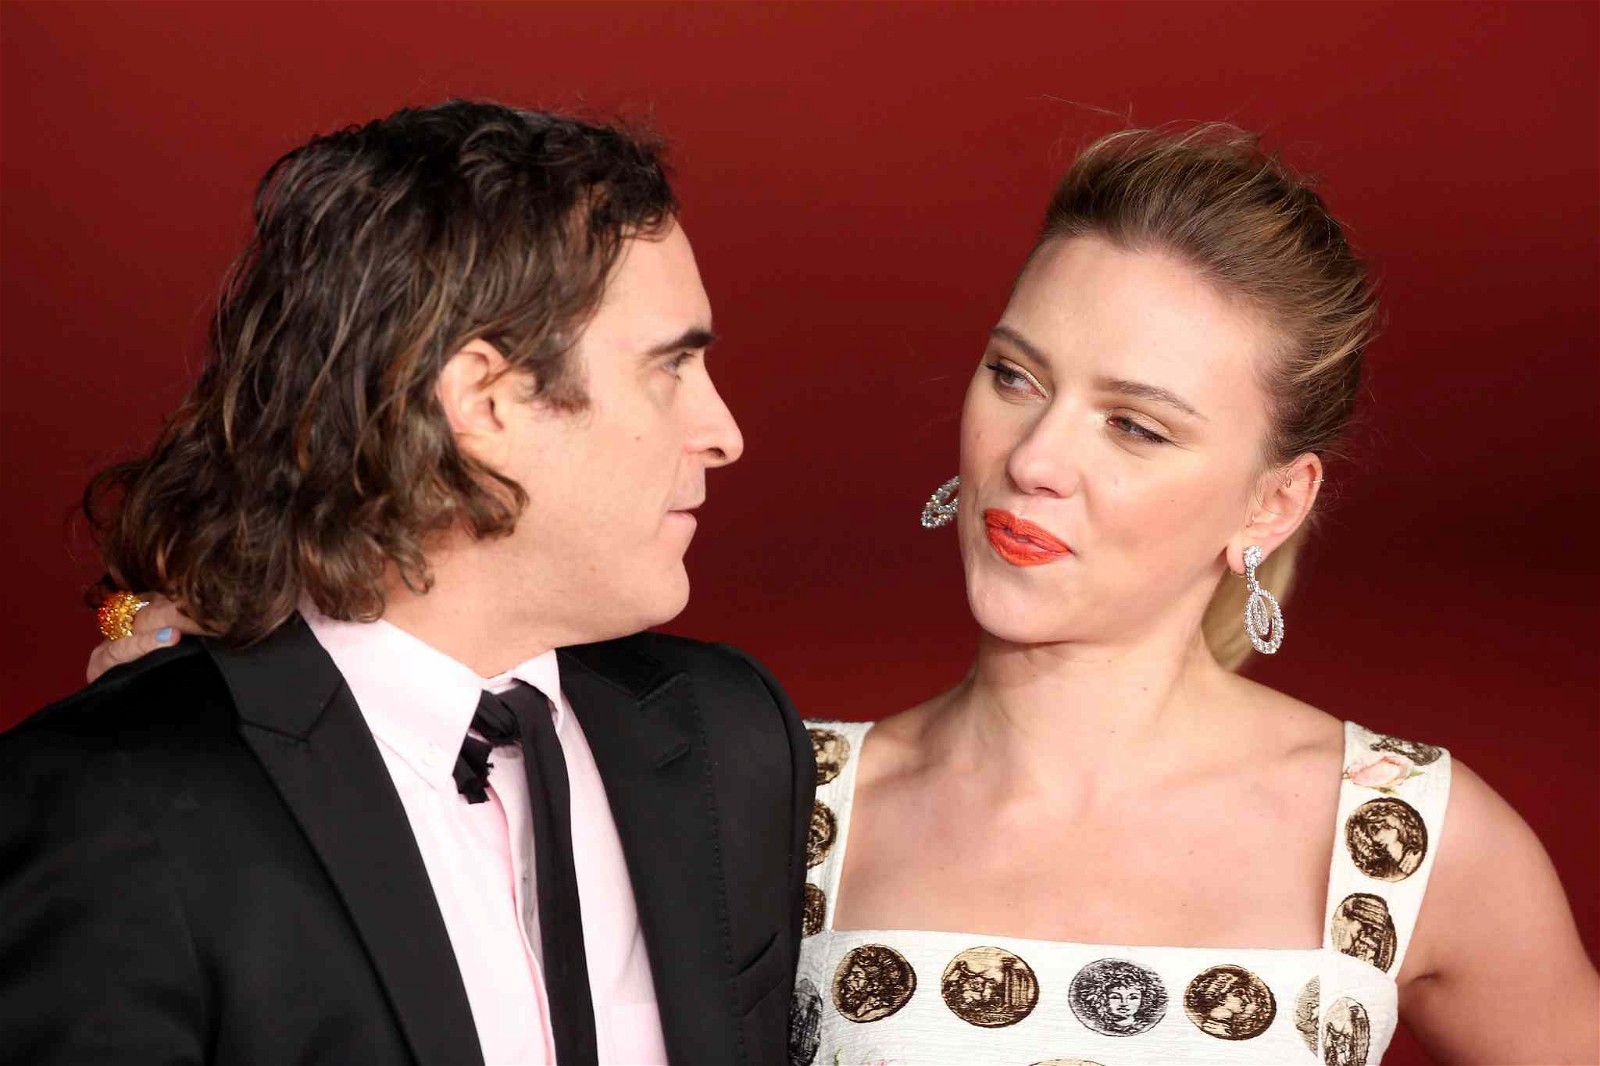 Joaquin Phoenix and Scarlett Johansson on Her red carpet premiere